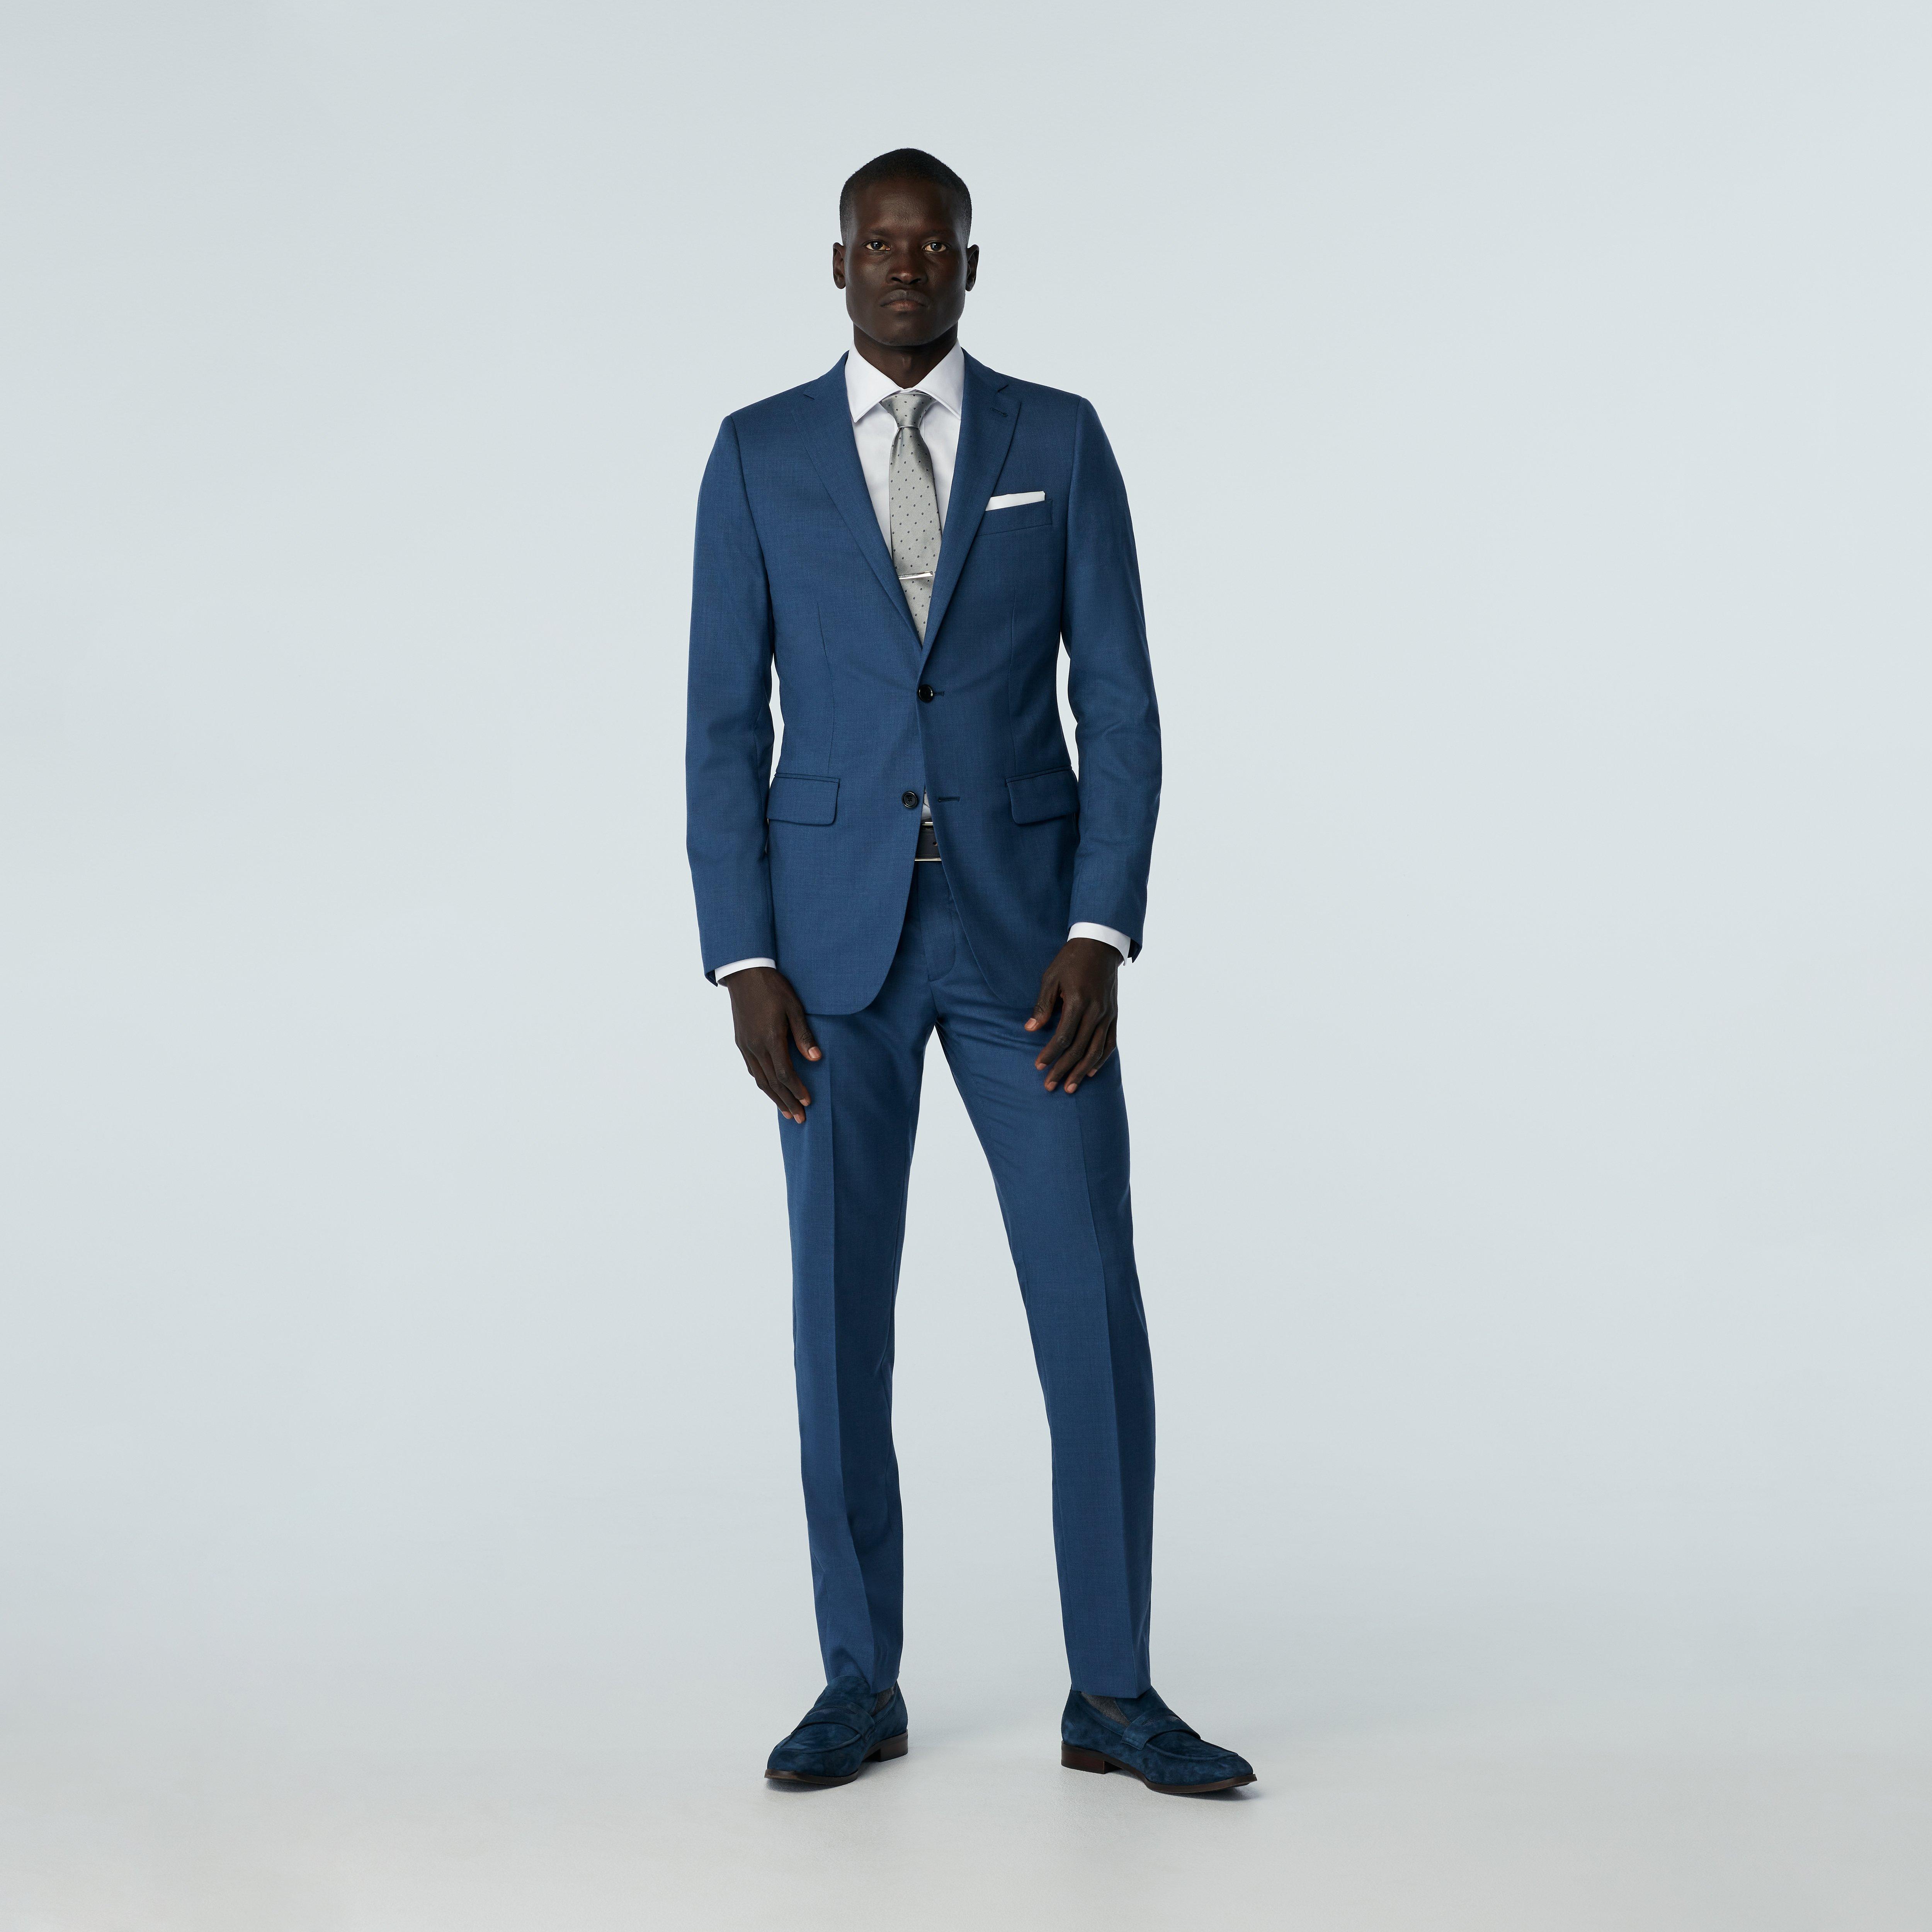 Brown Men's Suit Guide | Color in Menswear